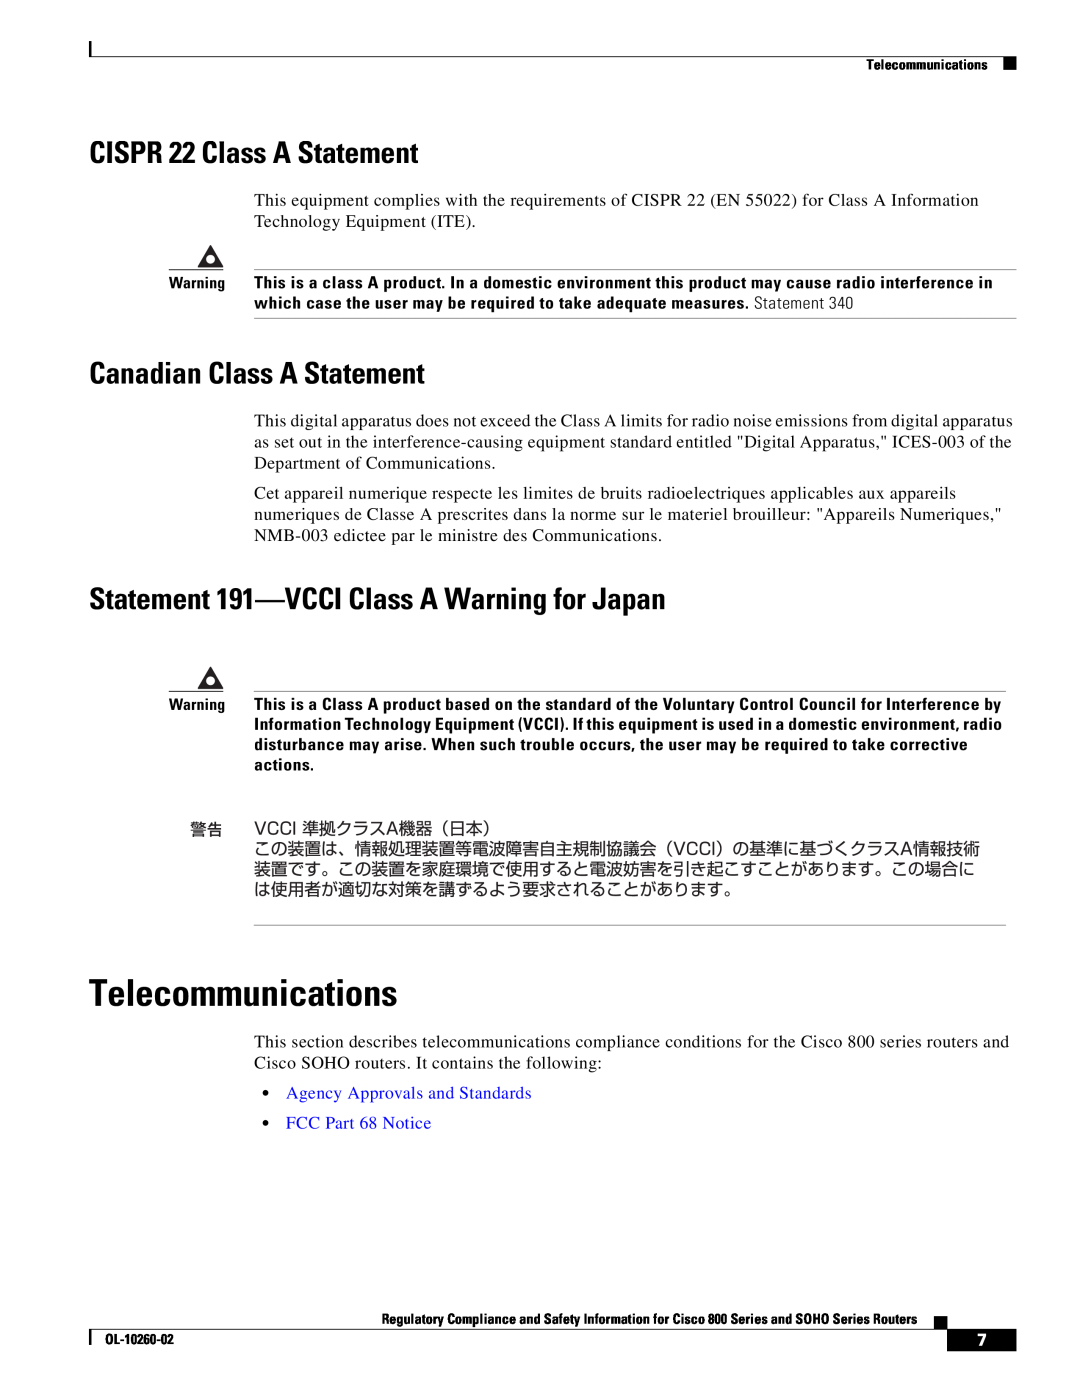 Cisco Systems SOHO Series manual Telecommunications, CISPR 22 Class A Statement, Canadian Class A Statement 